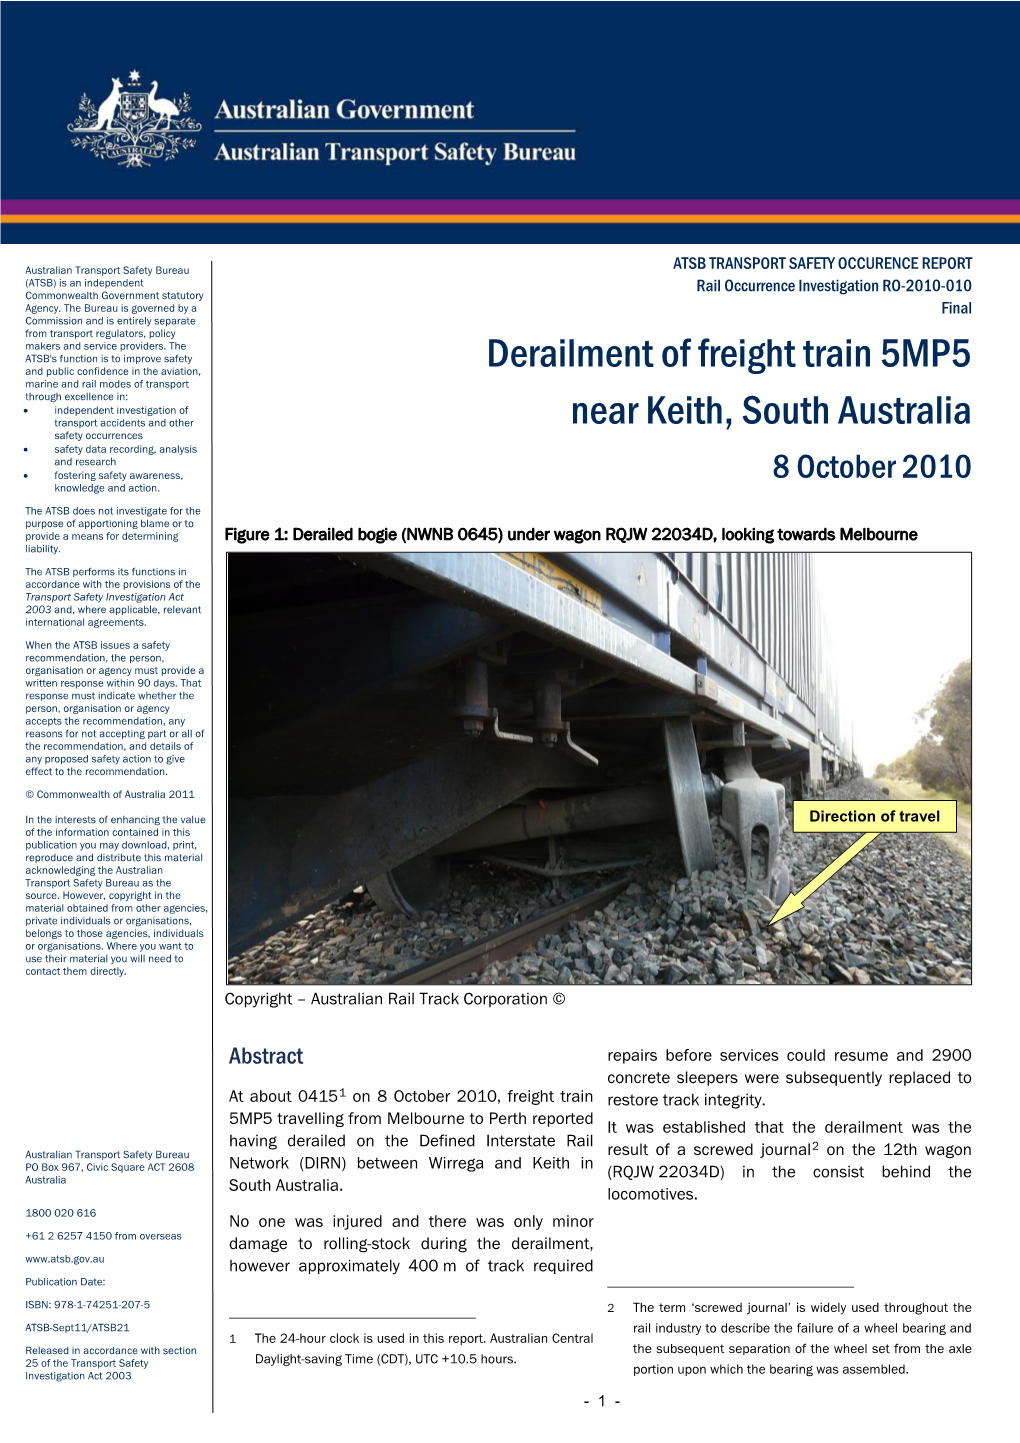 Derailment of Freight Train 5MP5 Near Keith, South Australia, 8 October 2010